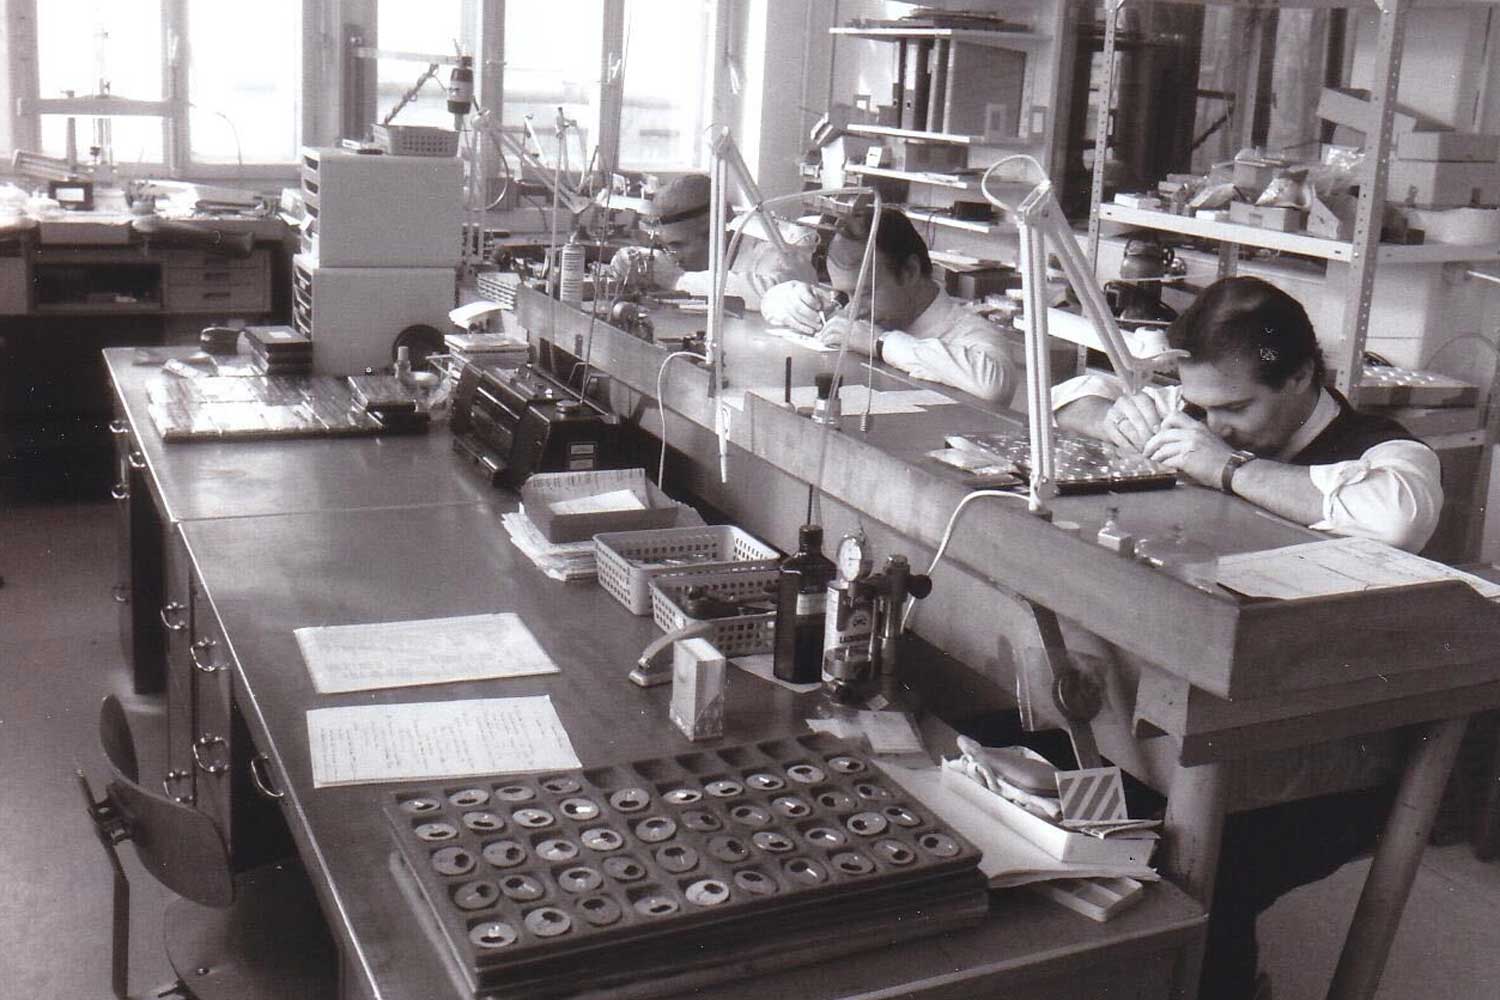 The Renaud et Papi workshop in 1989